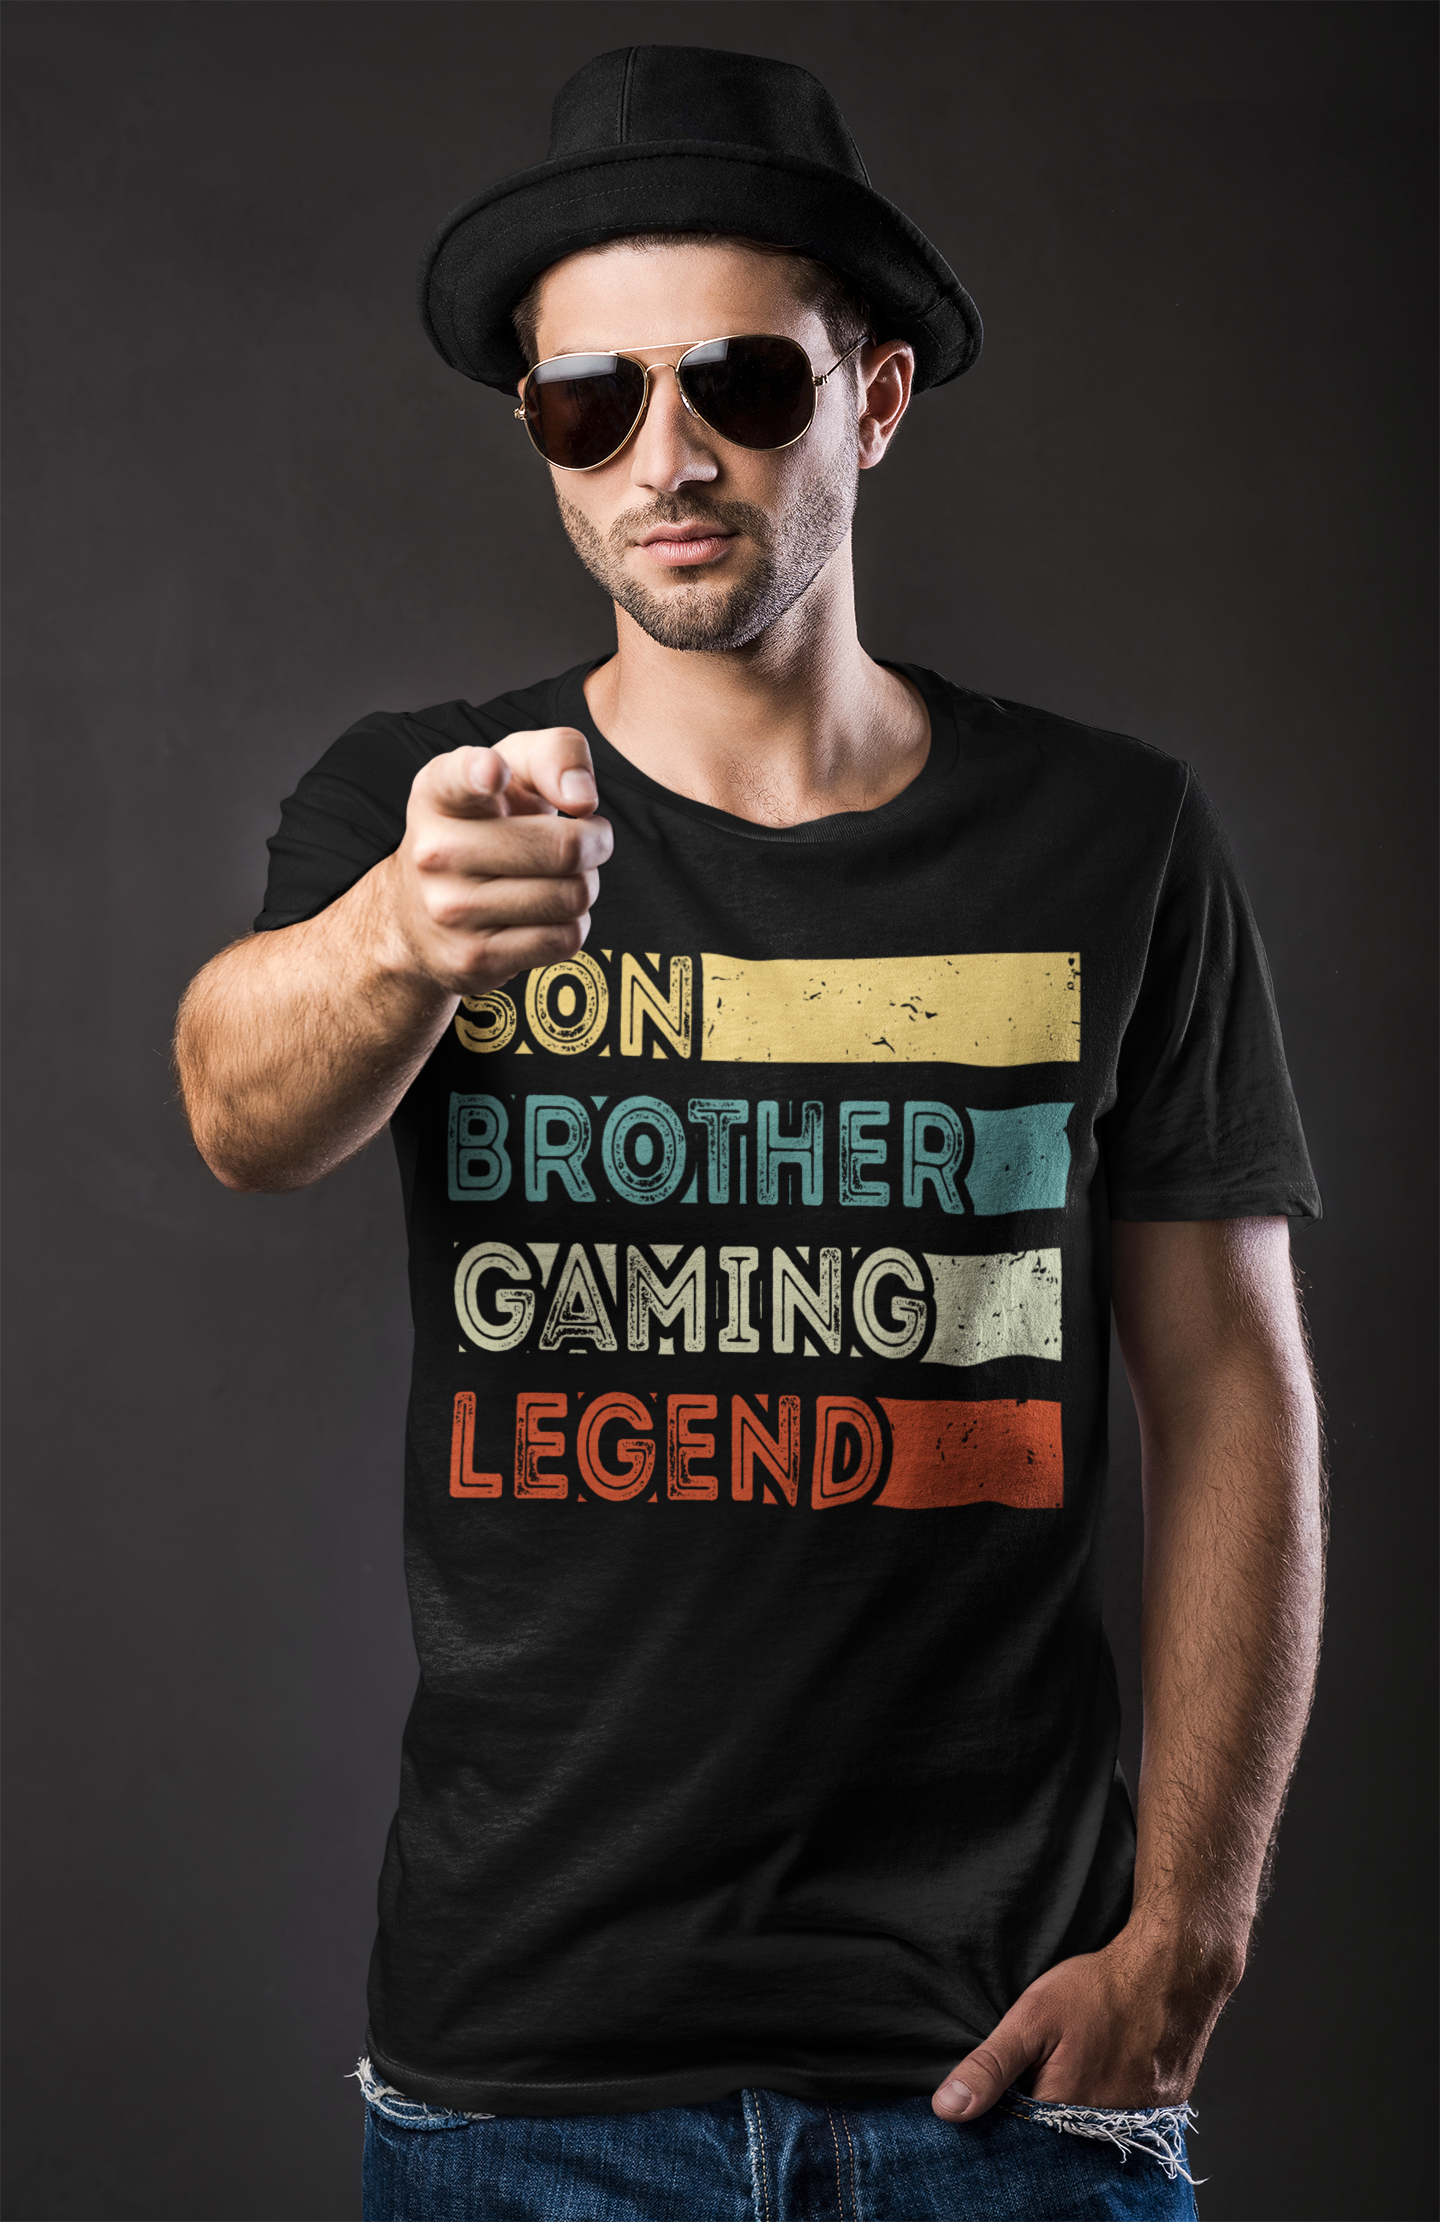 Son Brother Gaming Legend Black Round Neck T-Shirt for Men